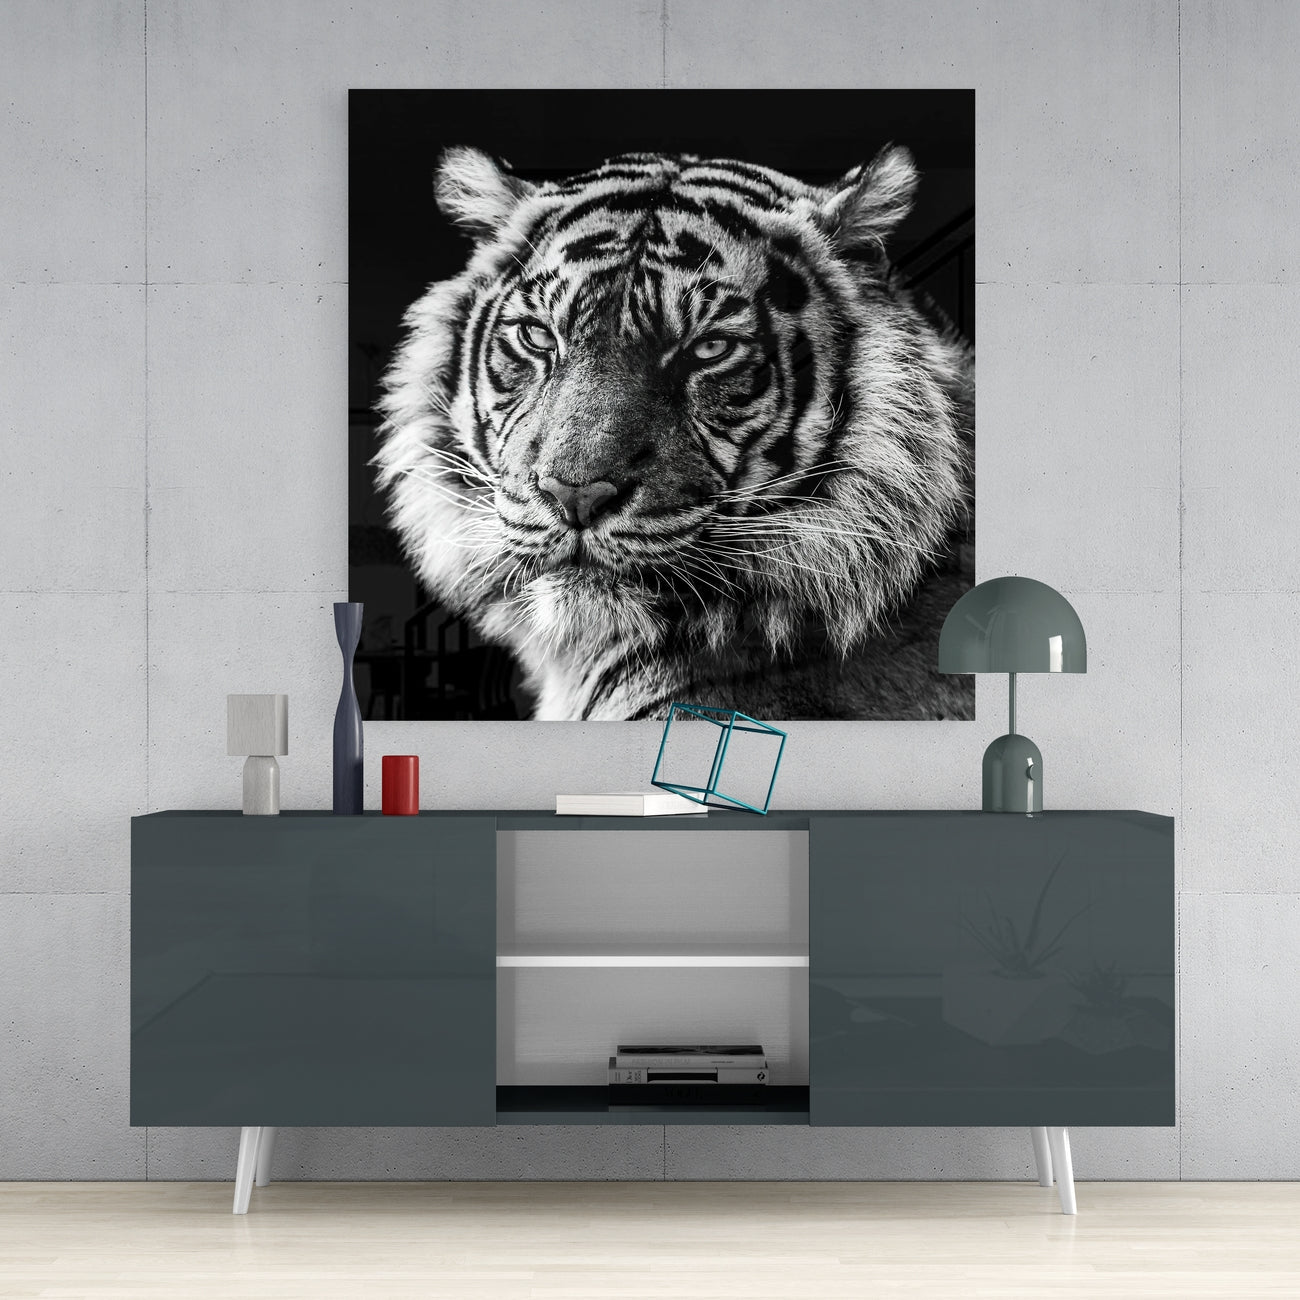 Tiger's Look Glass Wall Art